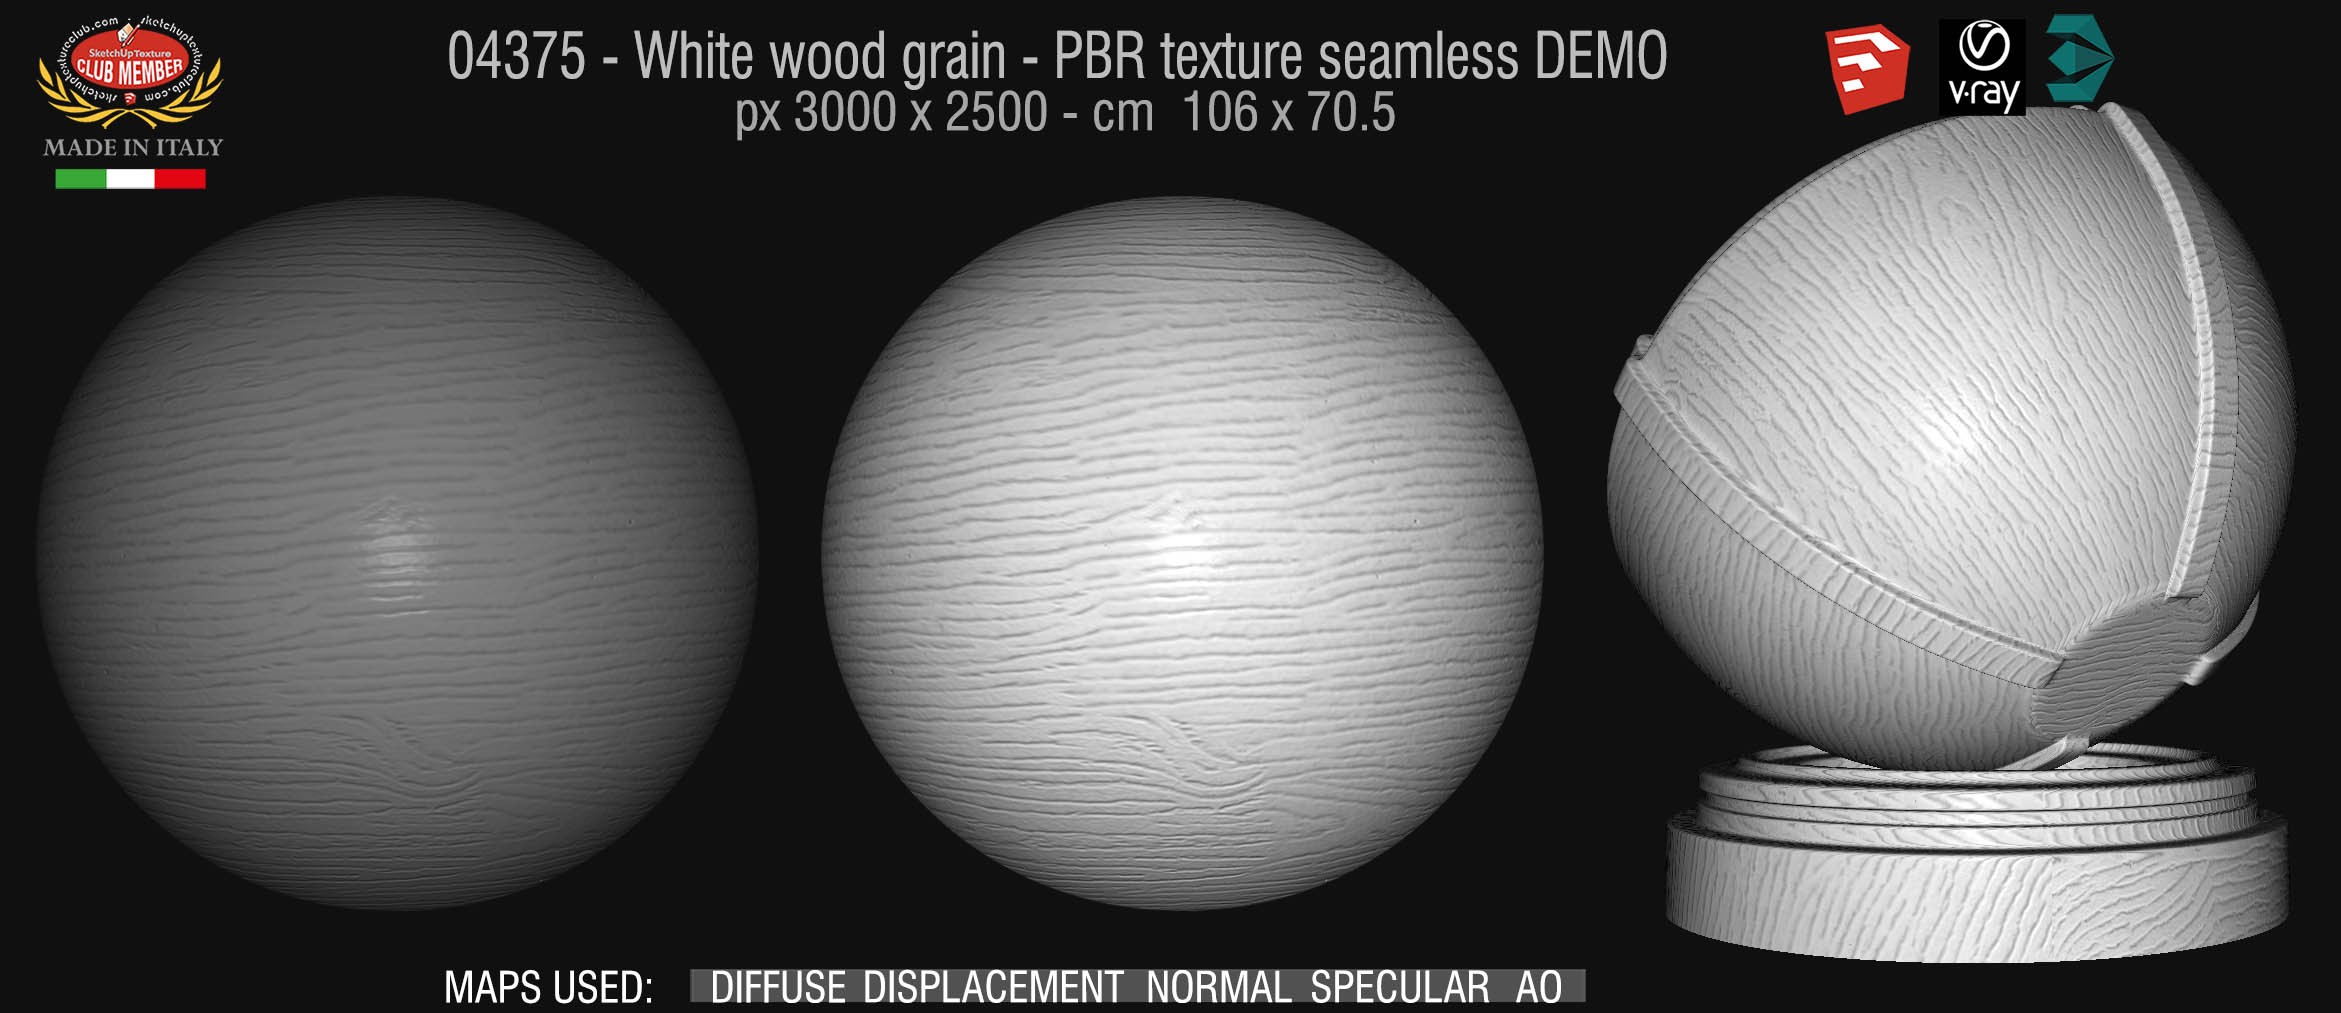 04375 White wood grain - PBR texture seamless DEMO